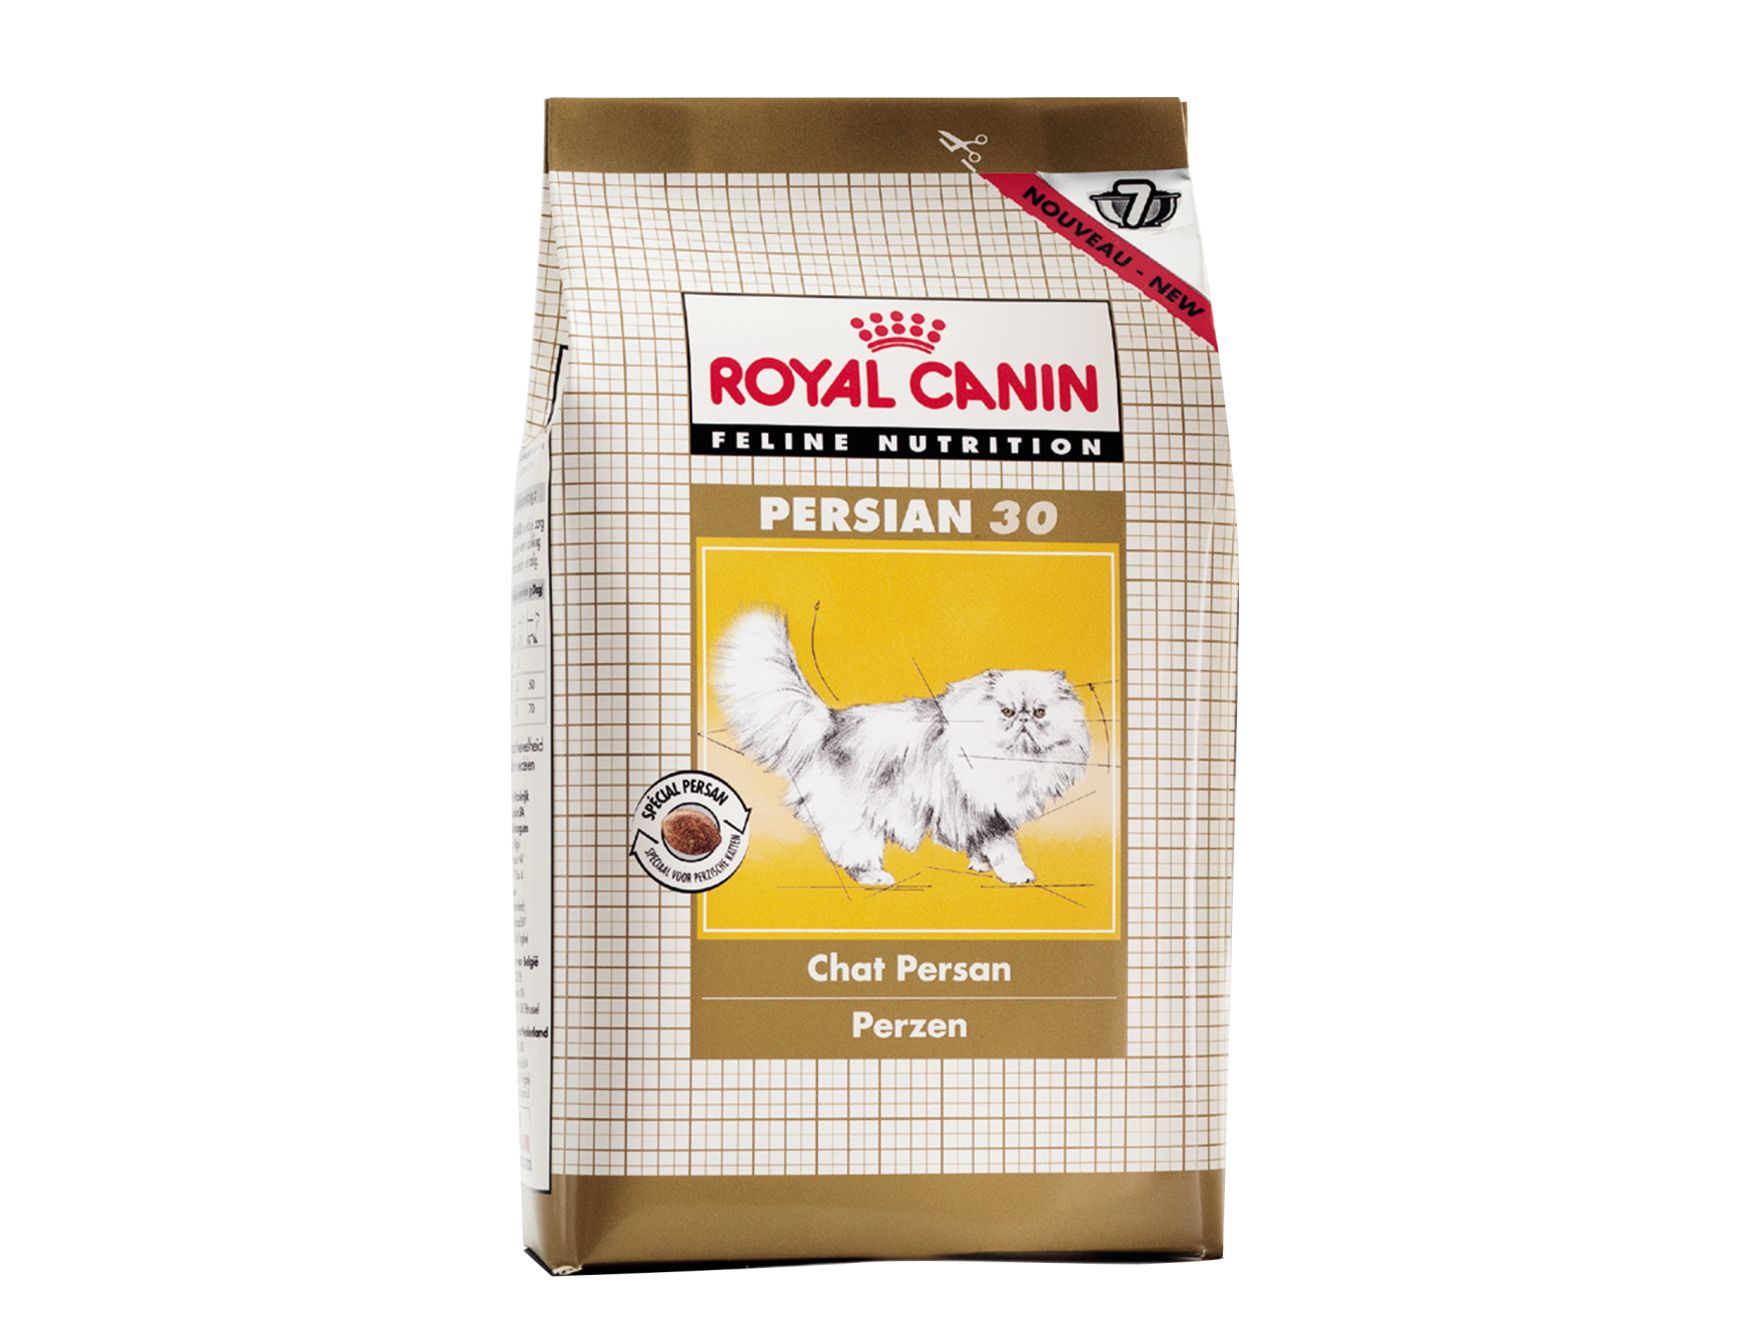 Packshot von Royal Canin-Perserkatzen-Produkt